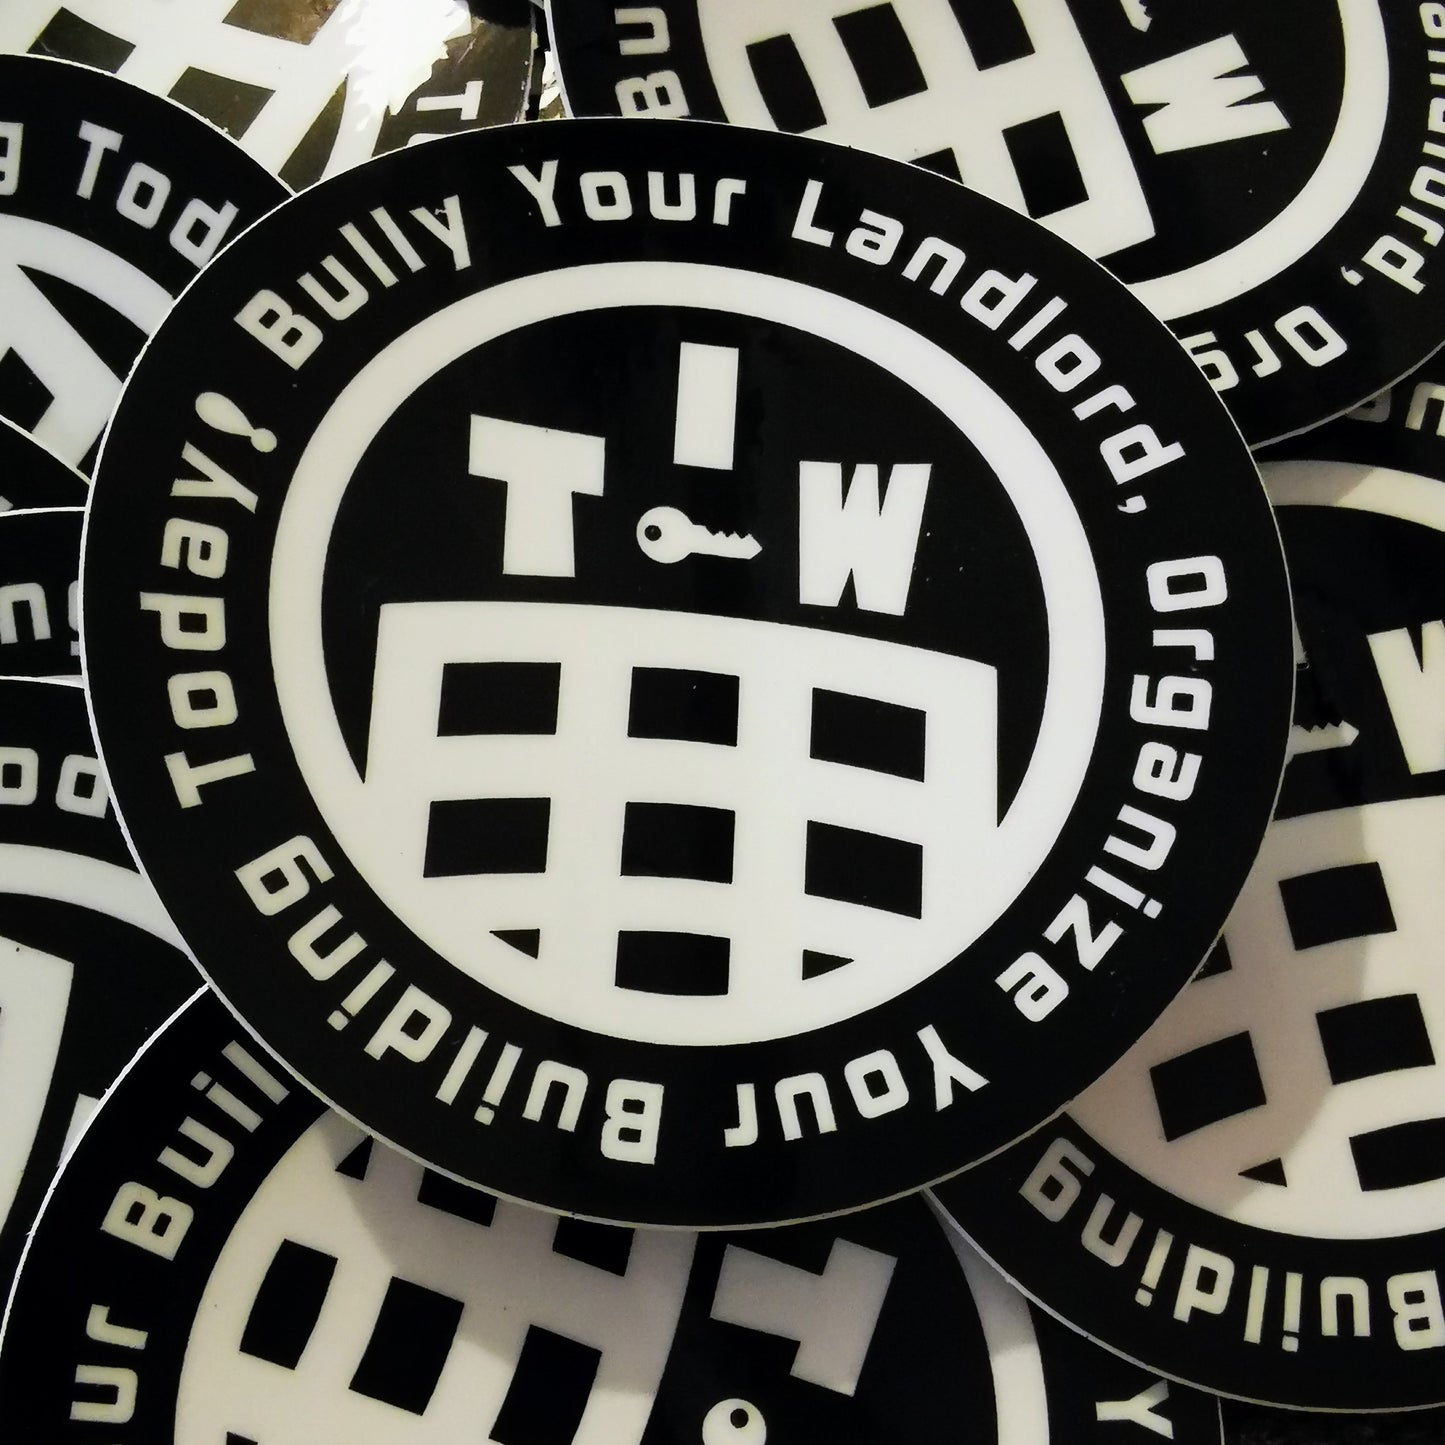 "Bully Your Landlord" Tenant Organizing Sticker